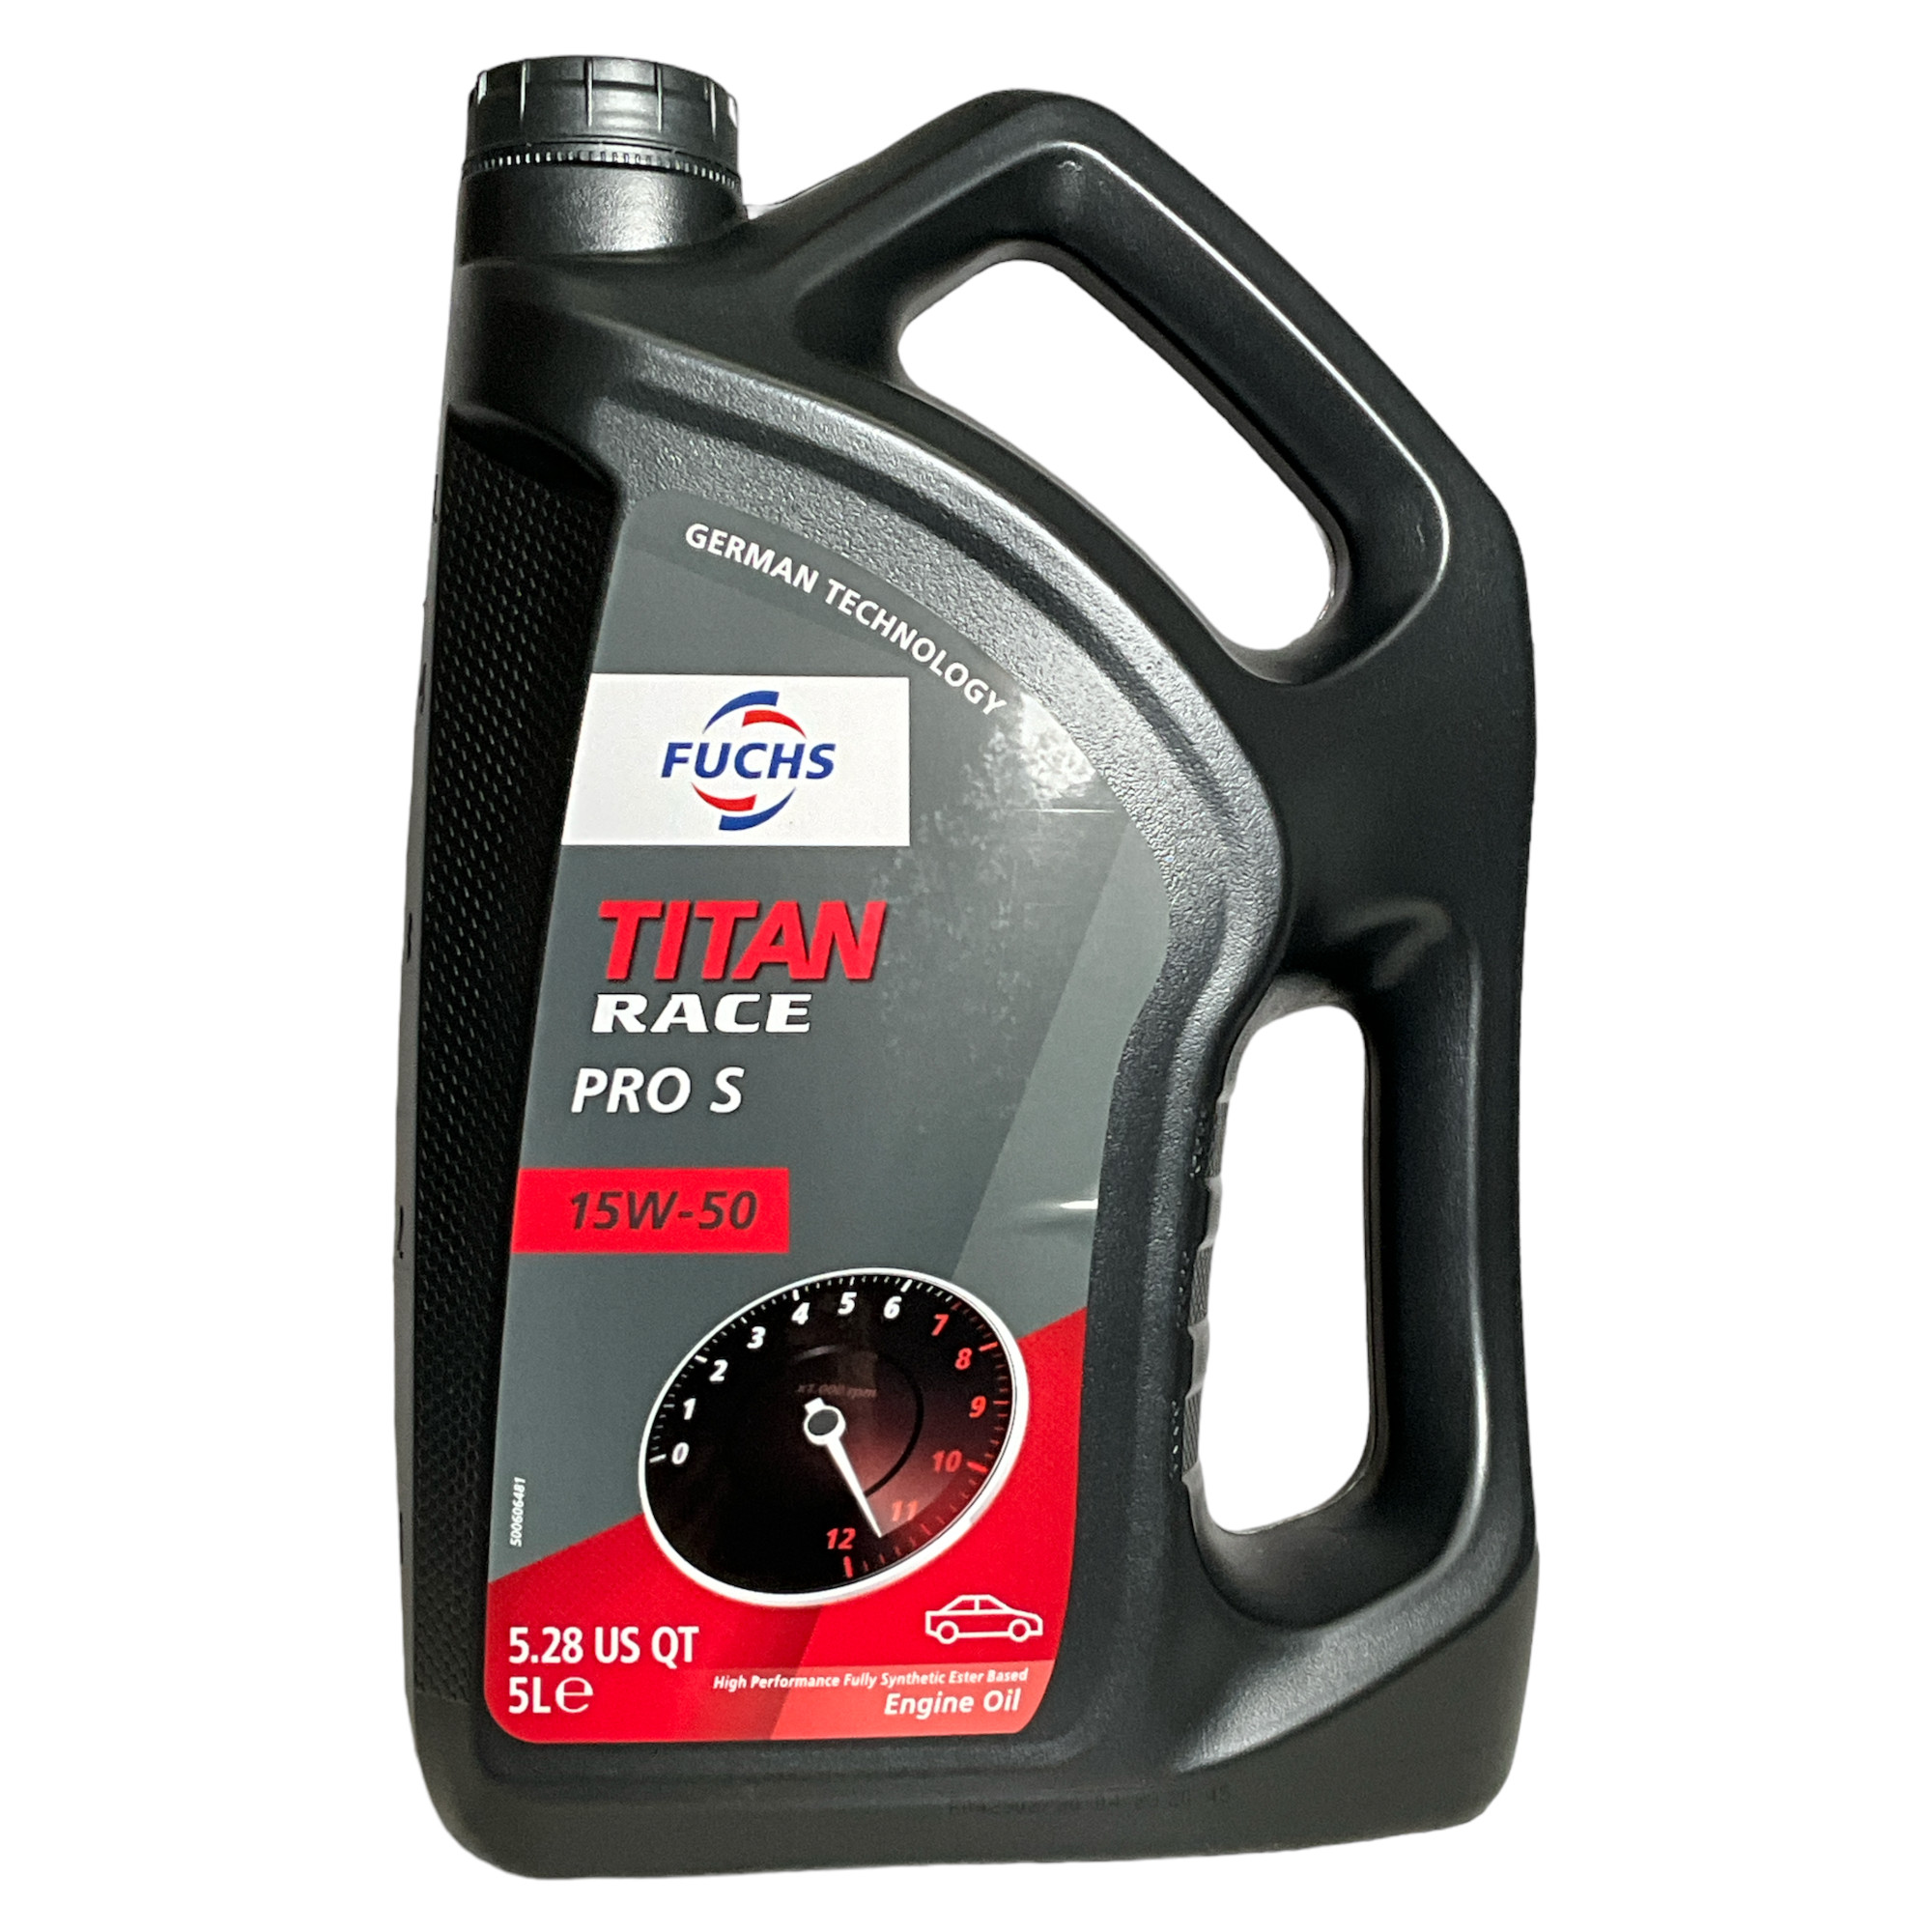 Fuchs Titan Race Pro S 15W-50